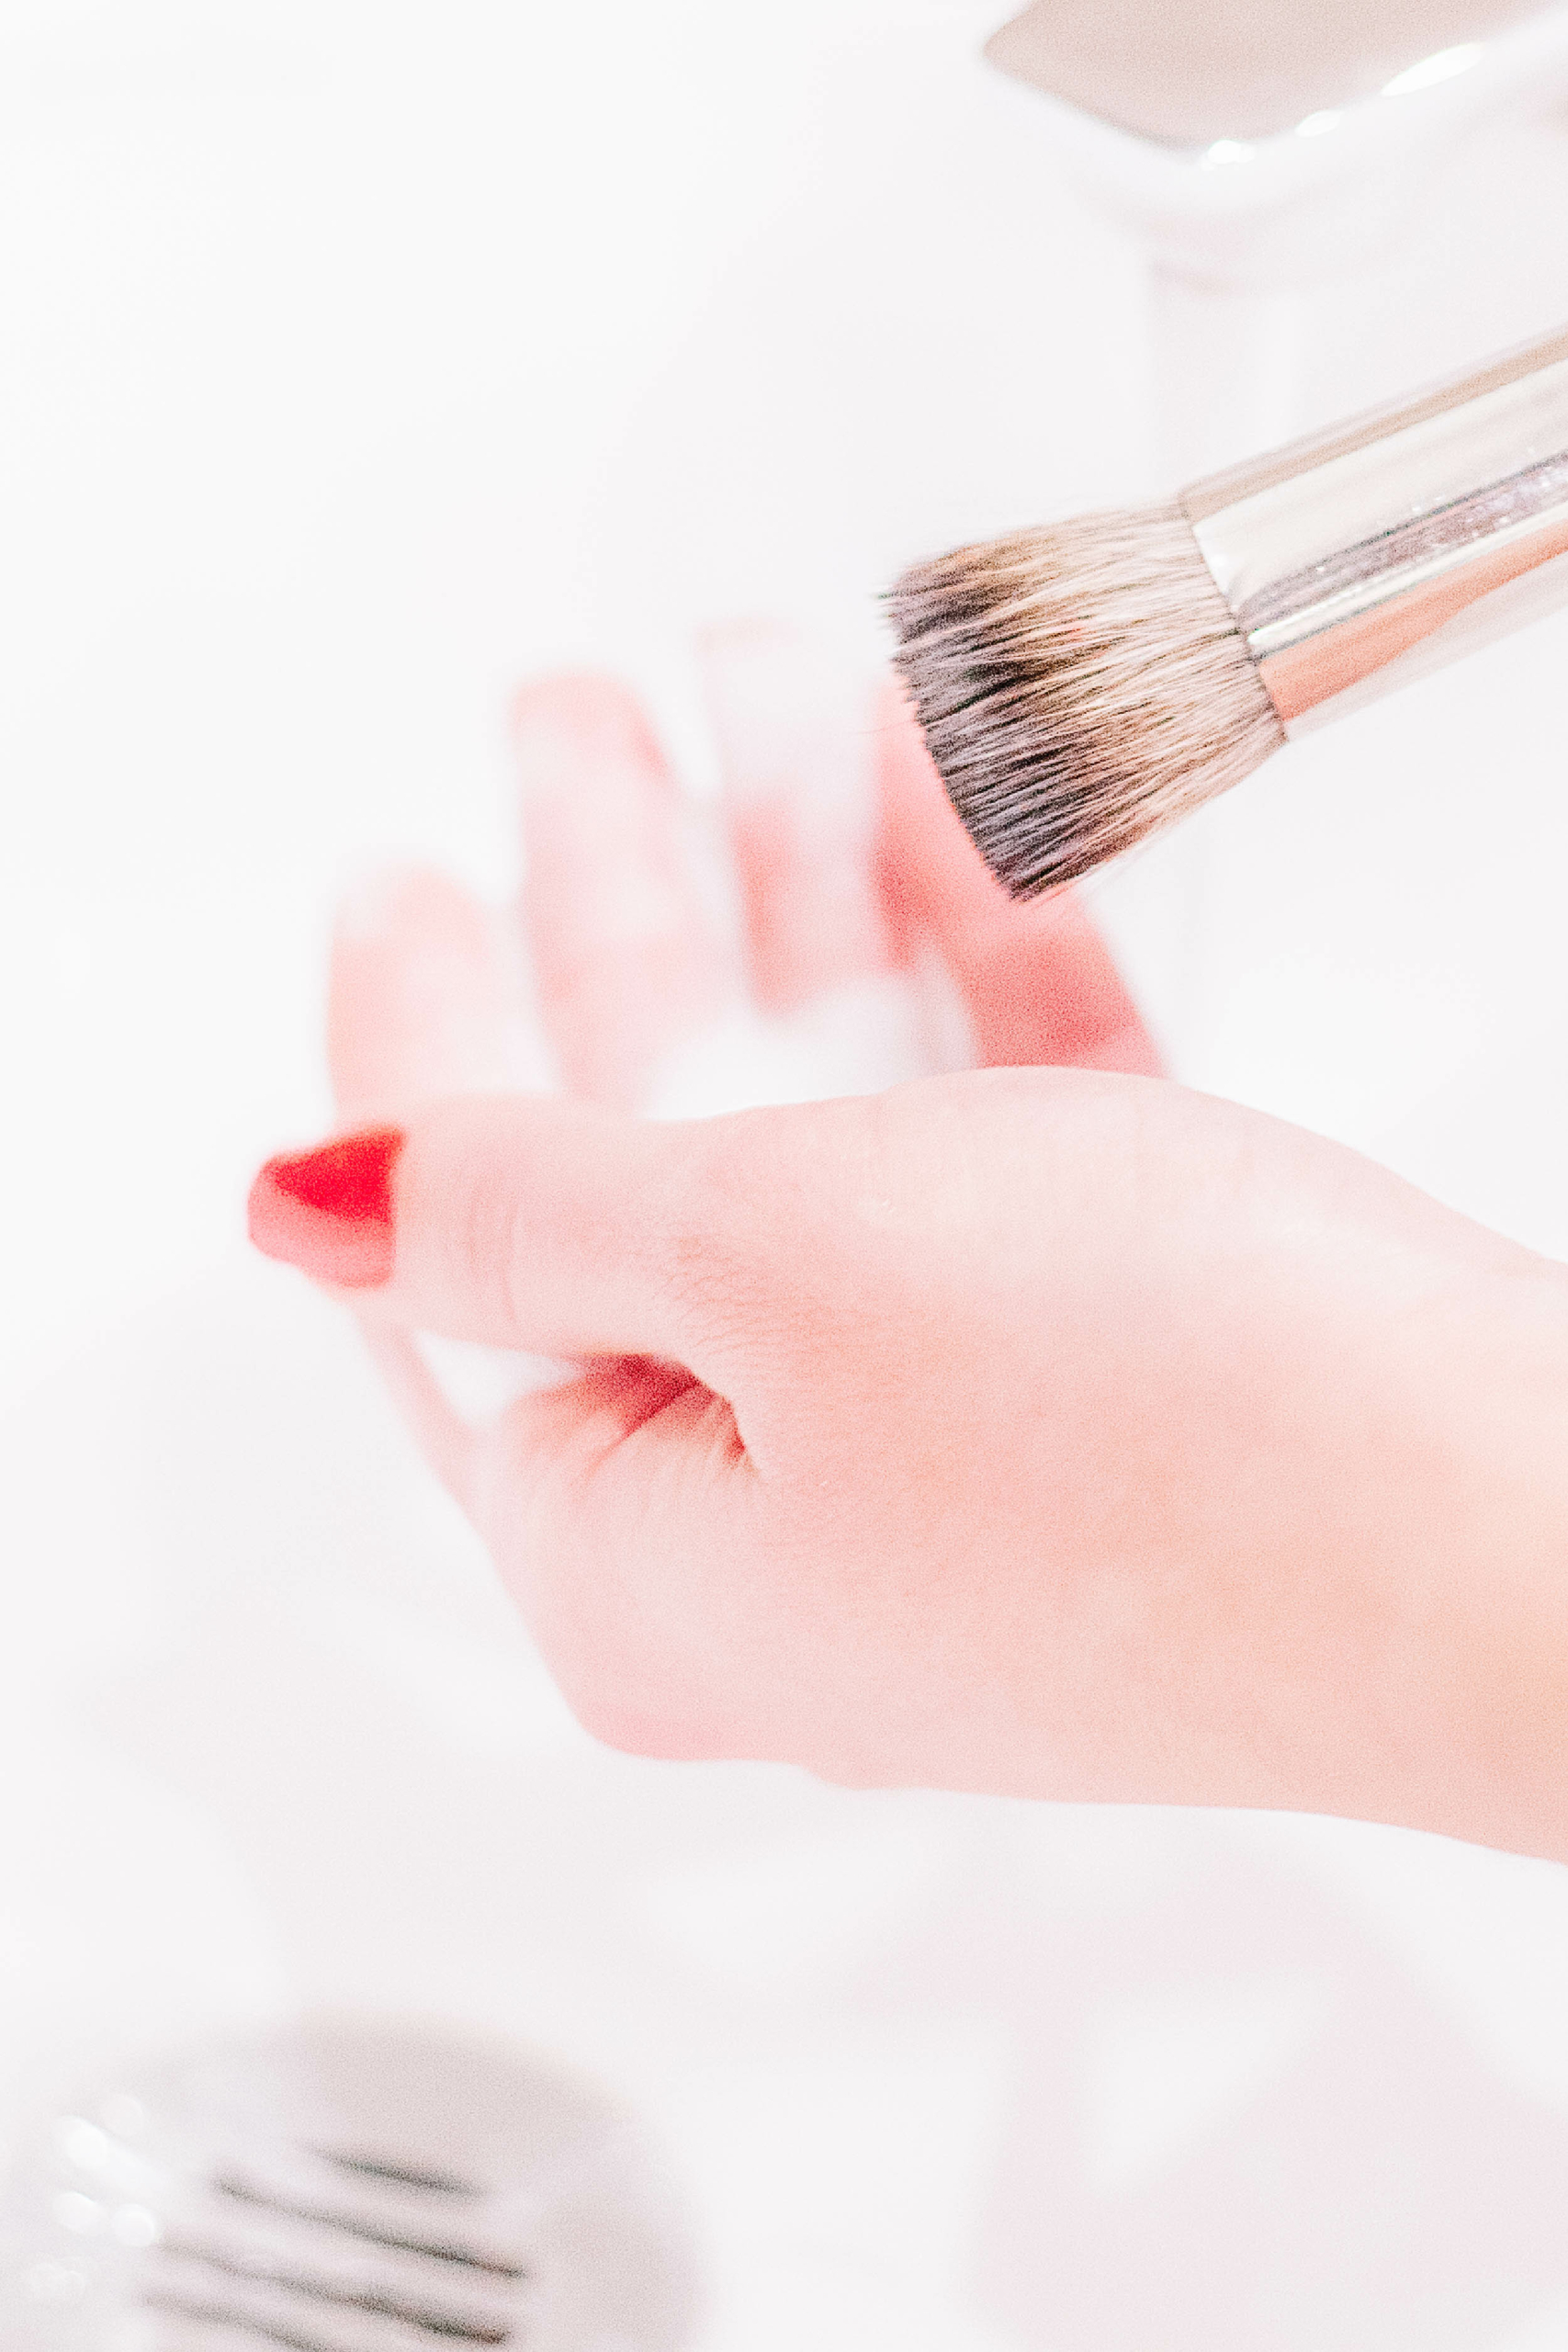 Homemade Makeup Brush Cleaner